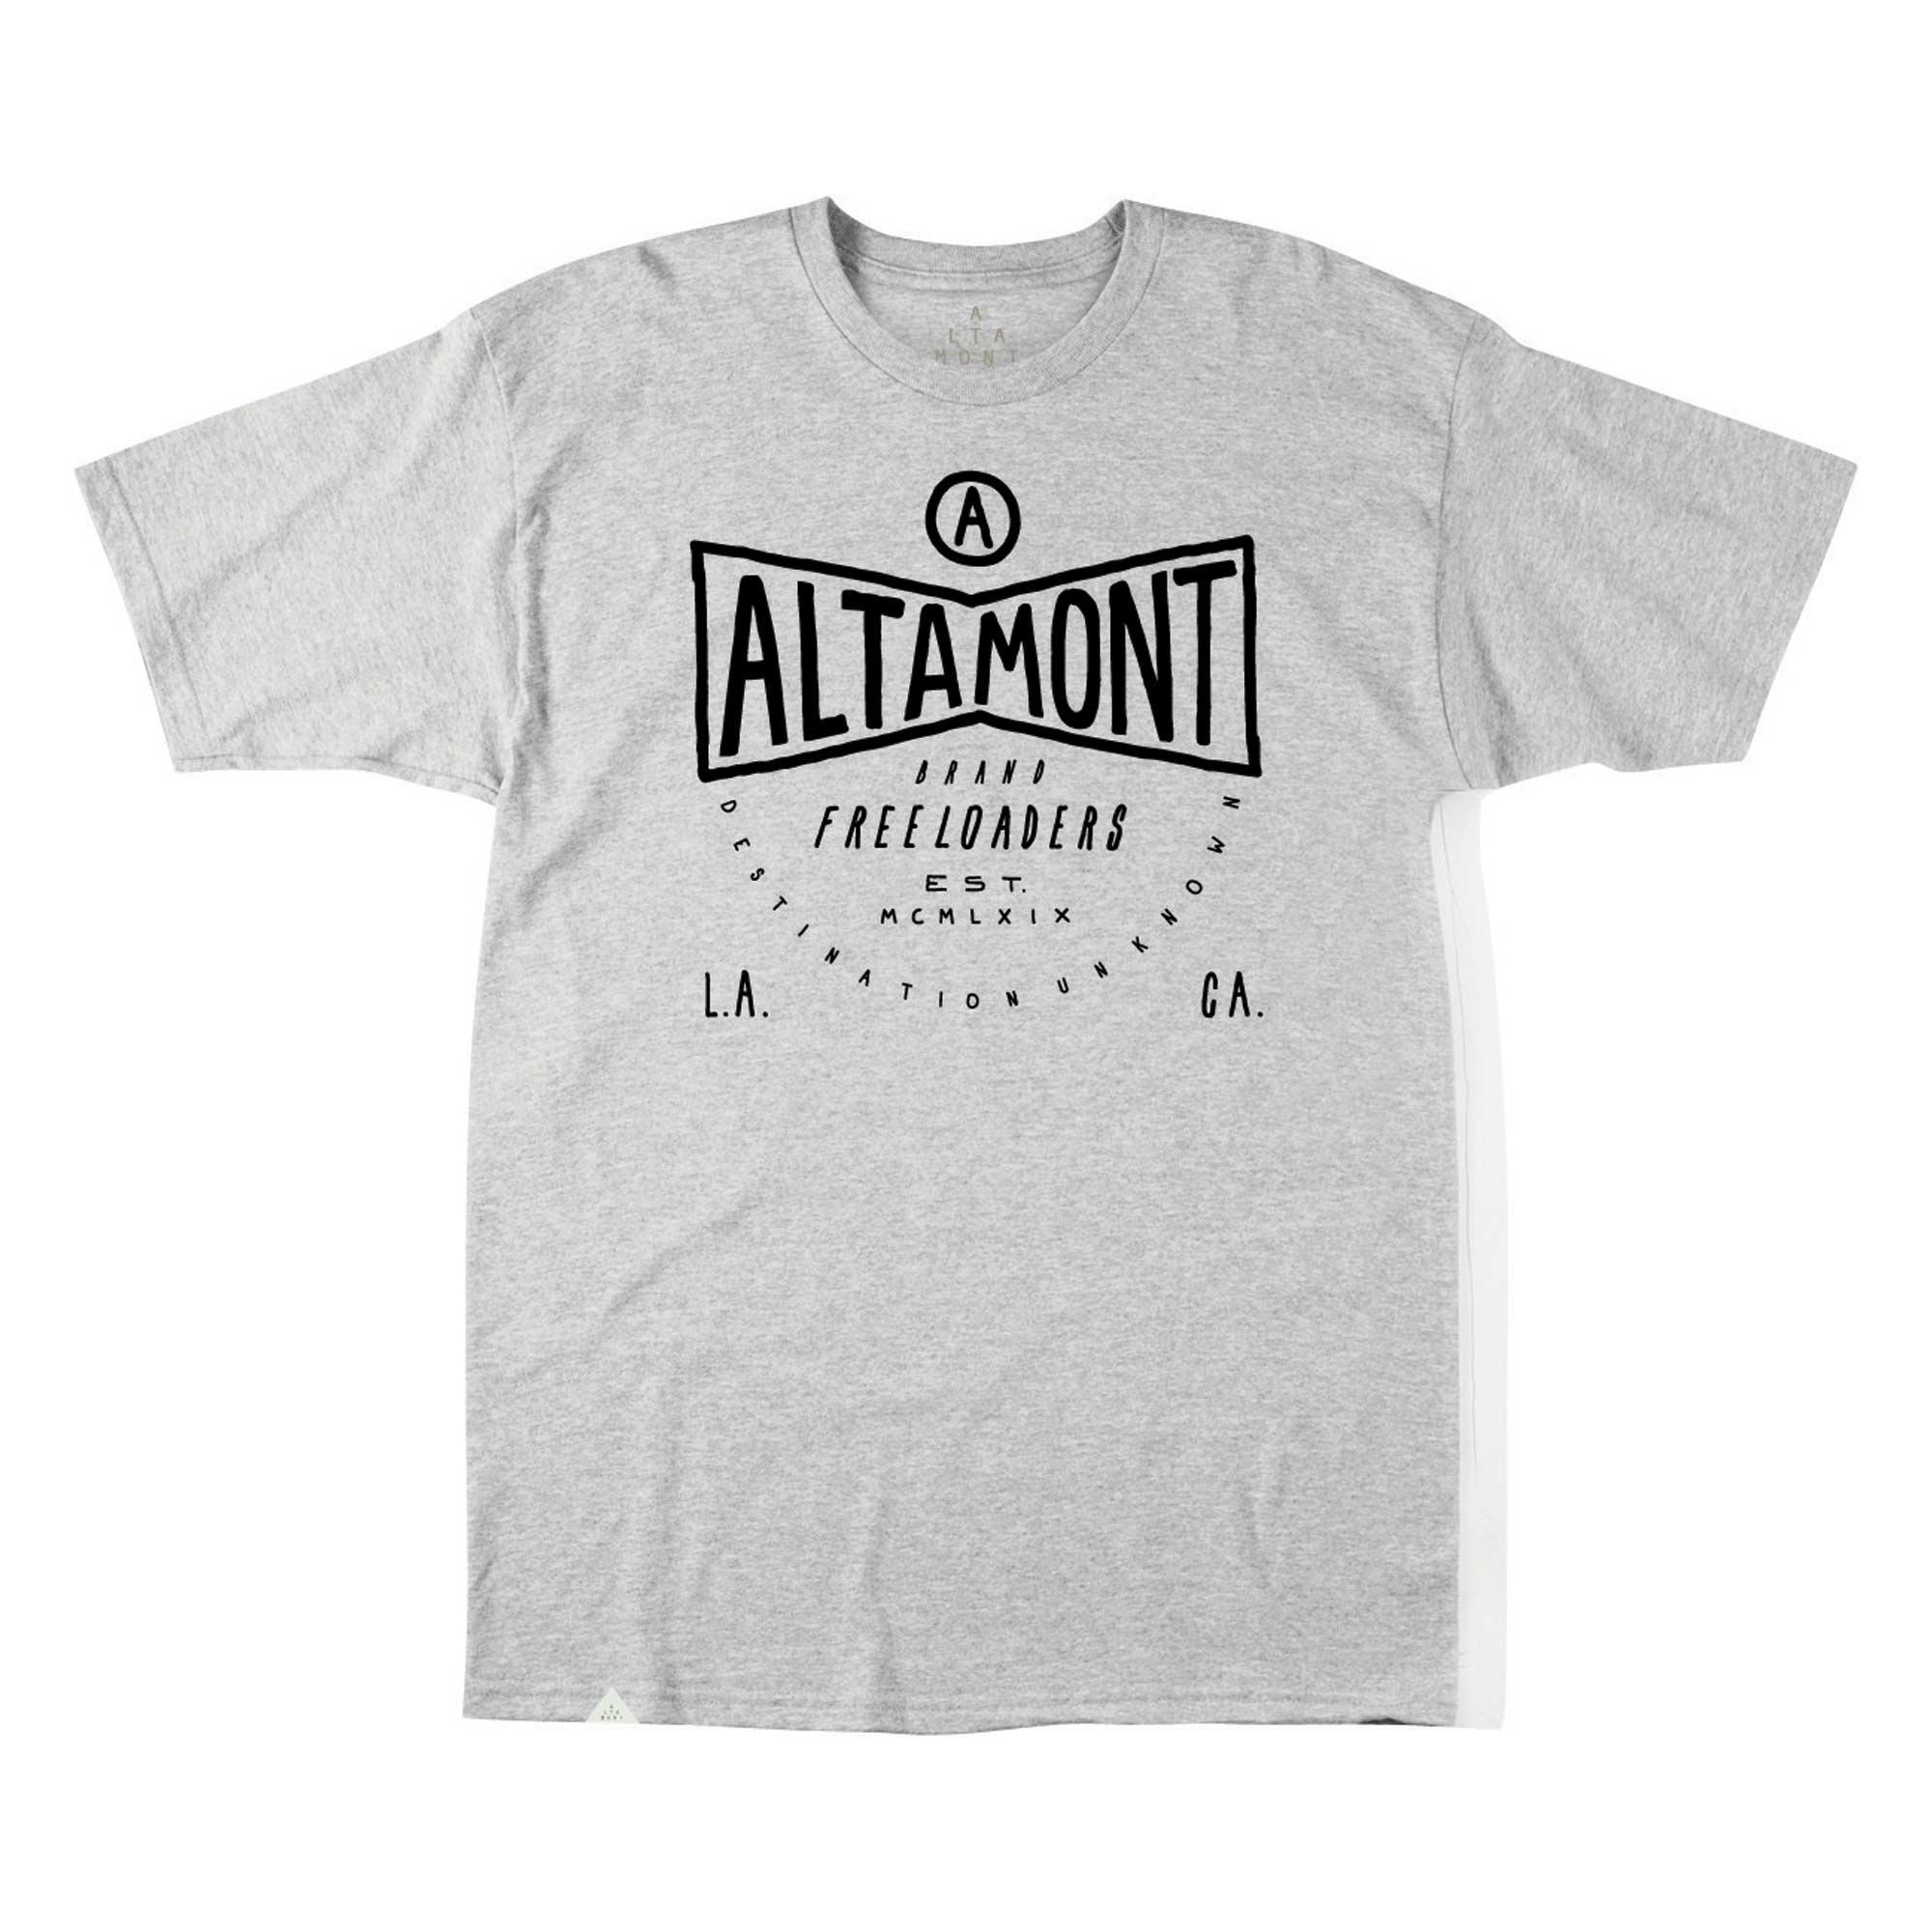 ALTAMONT T-Shirt FREE DESTINATION S/S grey/heather